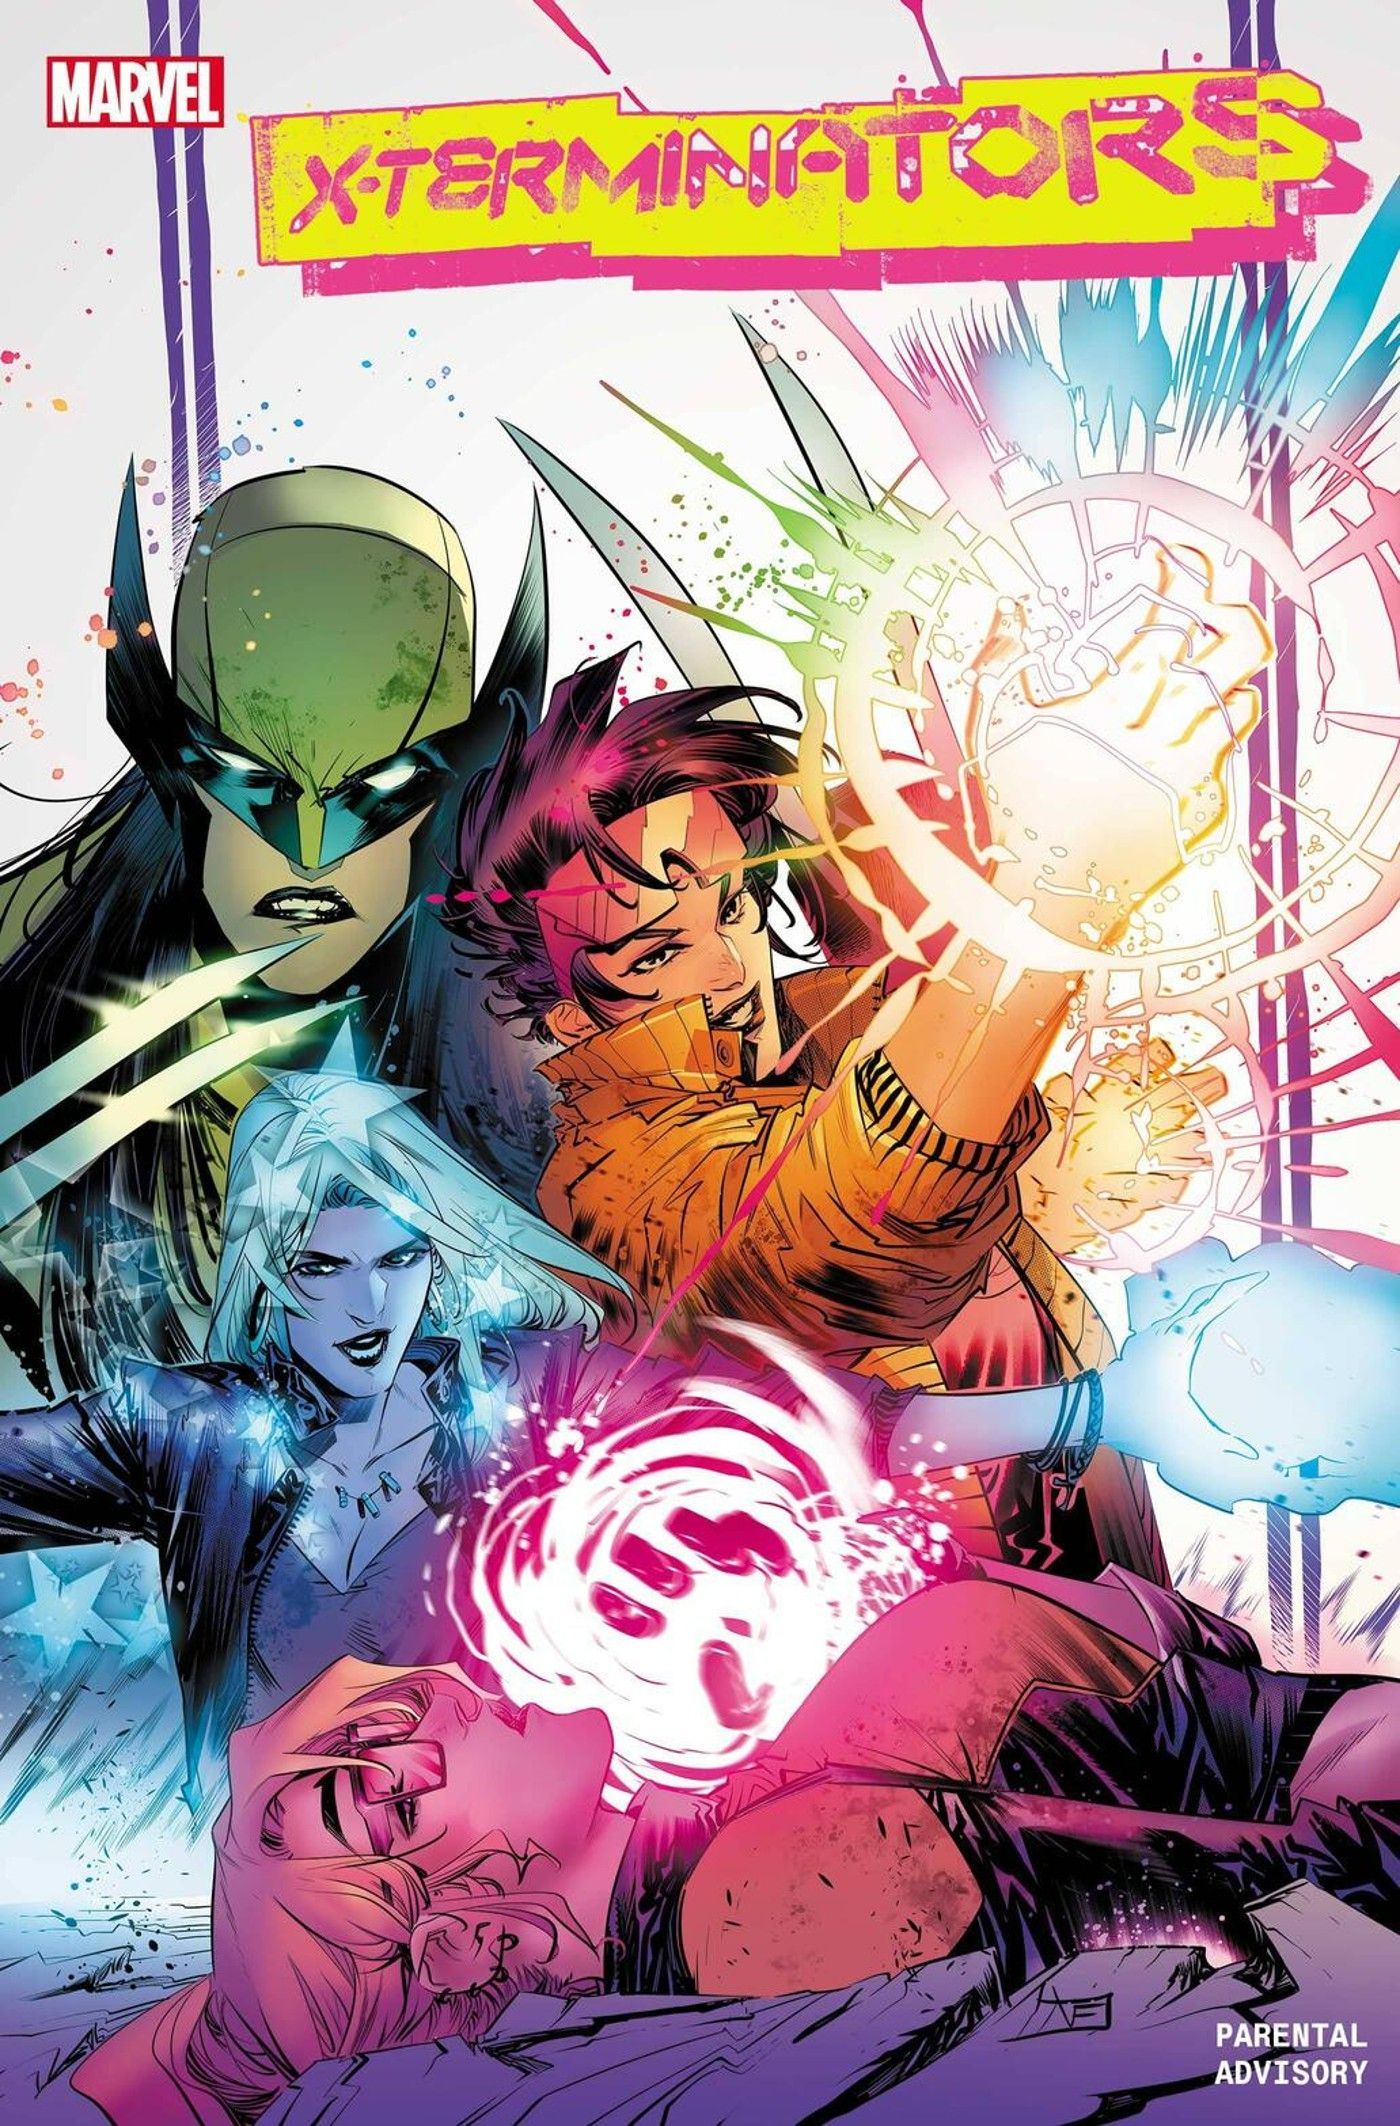 Wolverine Unites X-Men’s Most Demanded Heroes in New X-Terminators Team